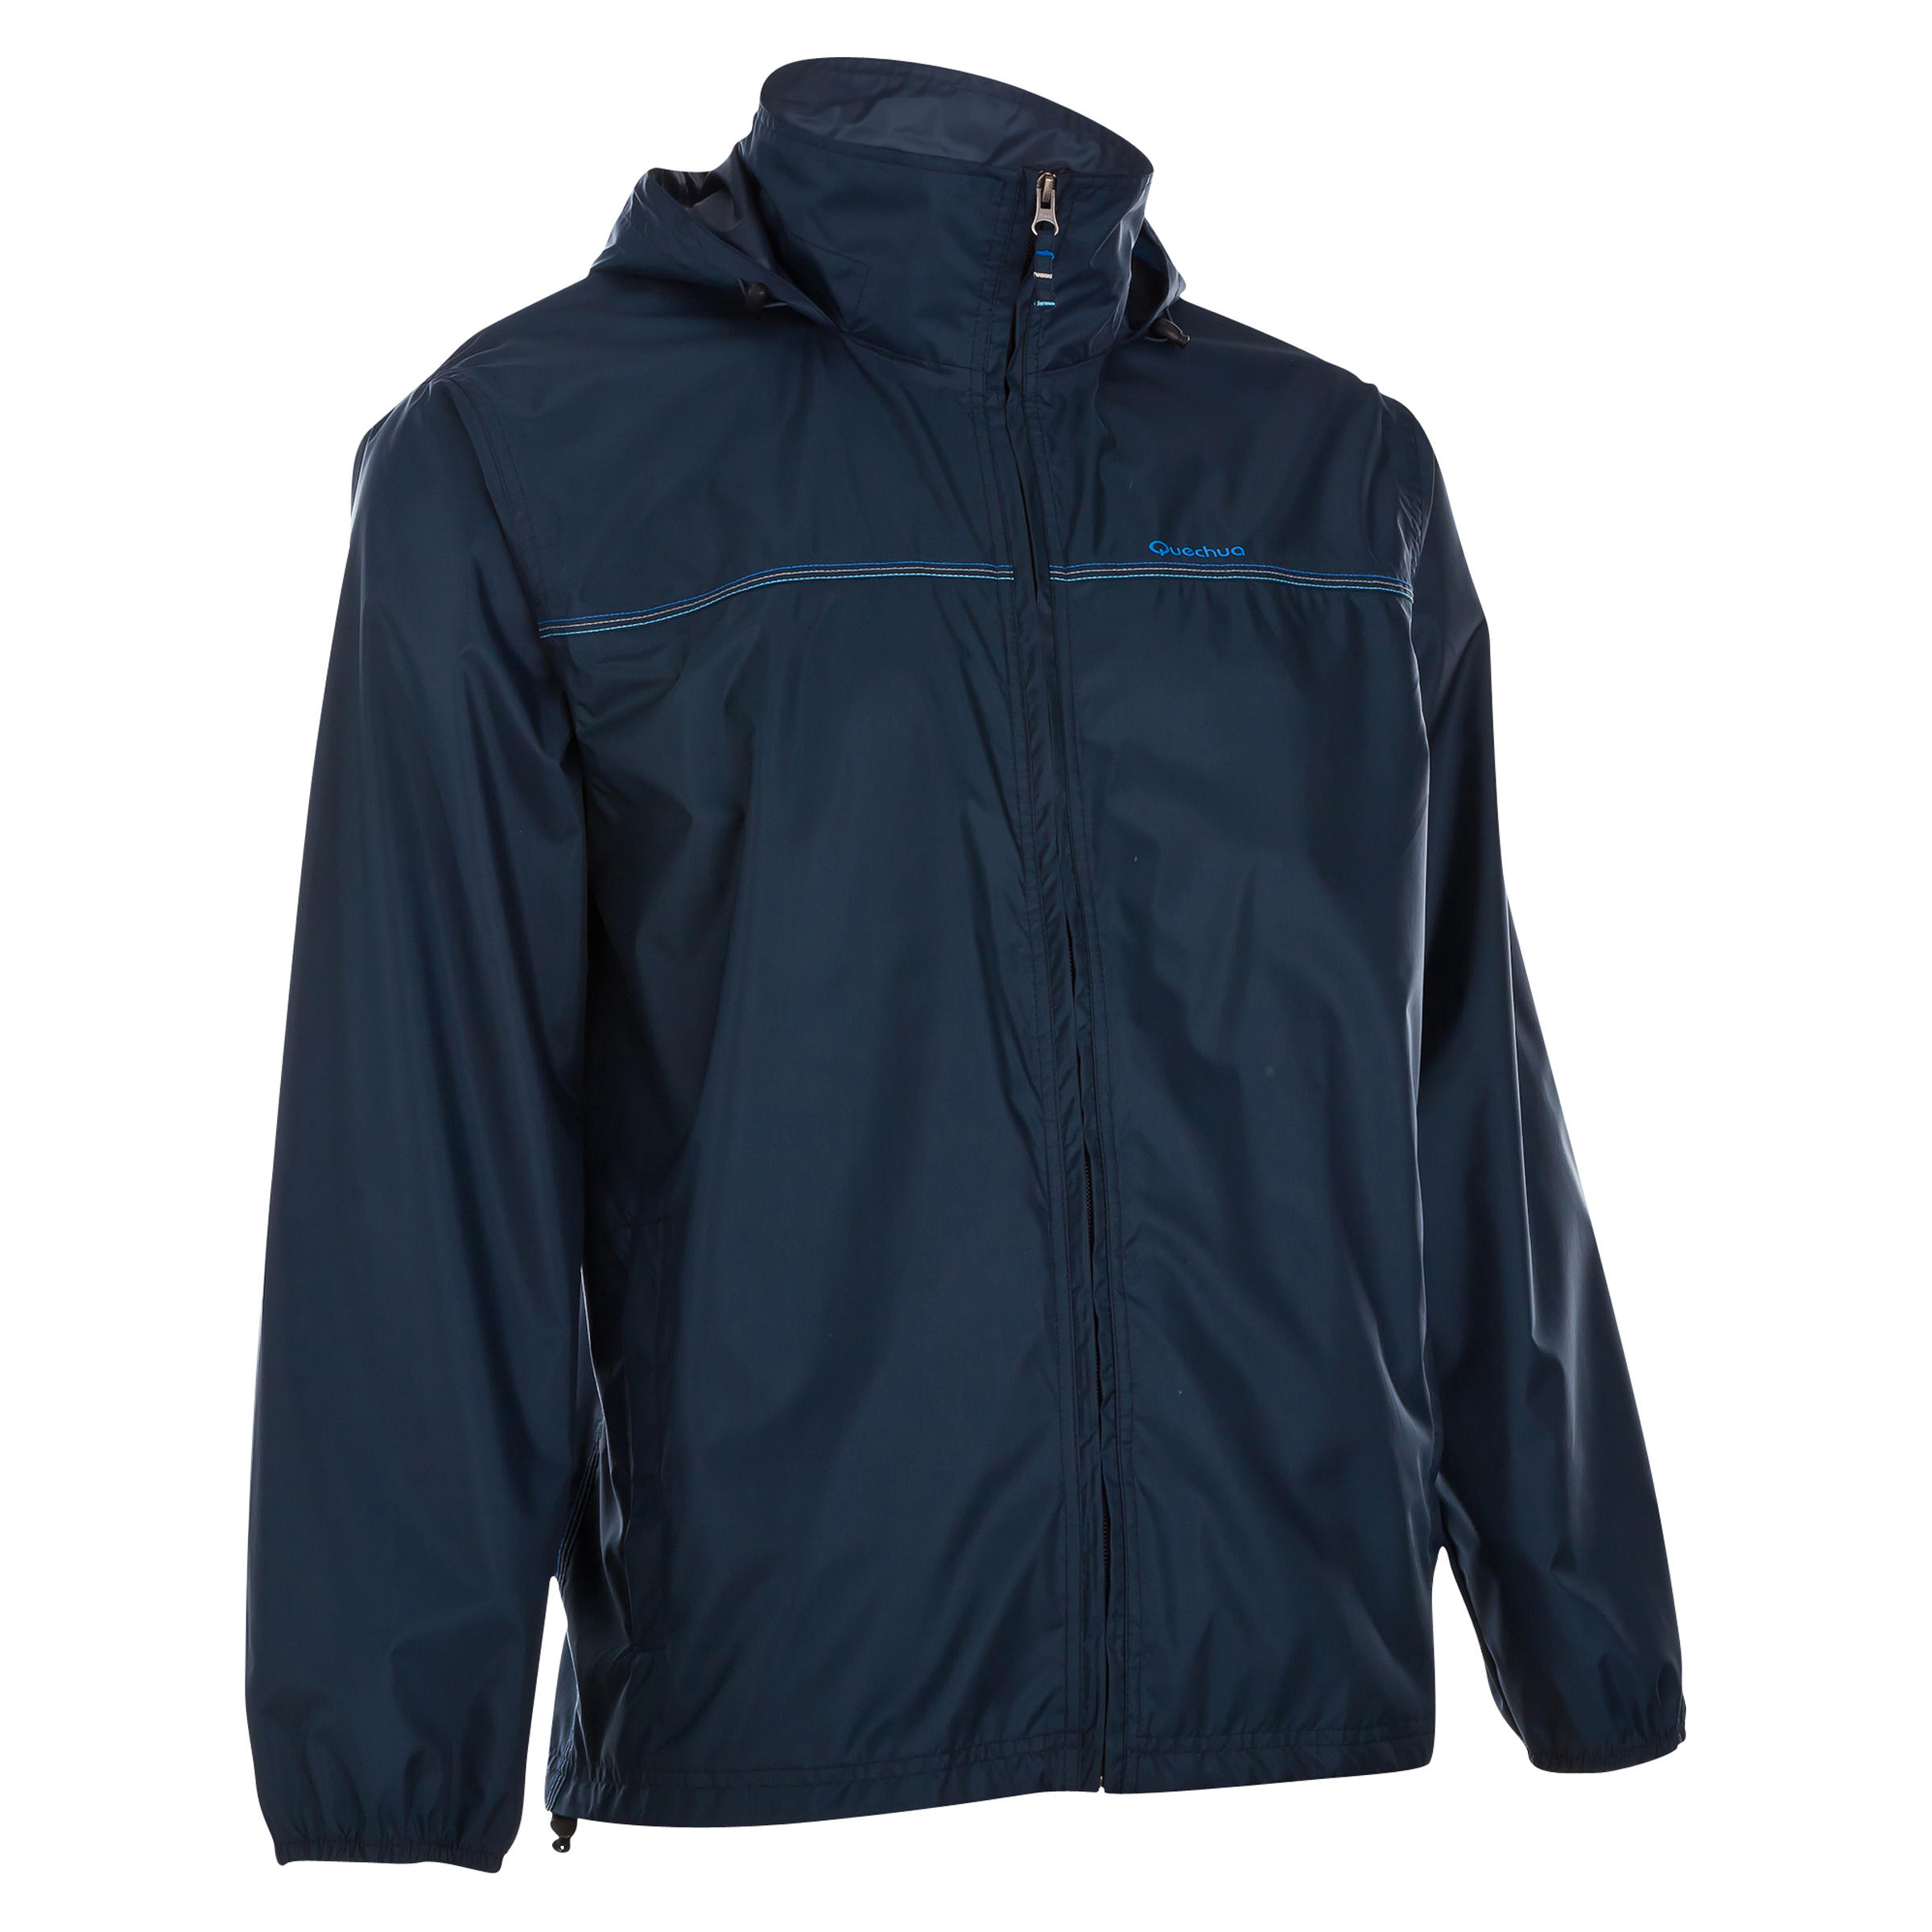 Buy Hiking Raincoat Online at Decathlon 